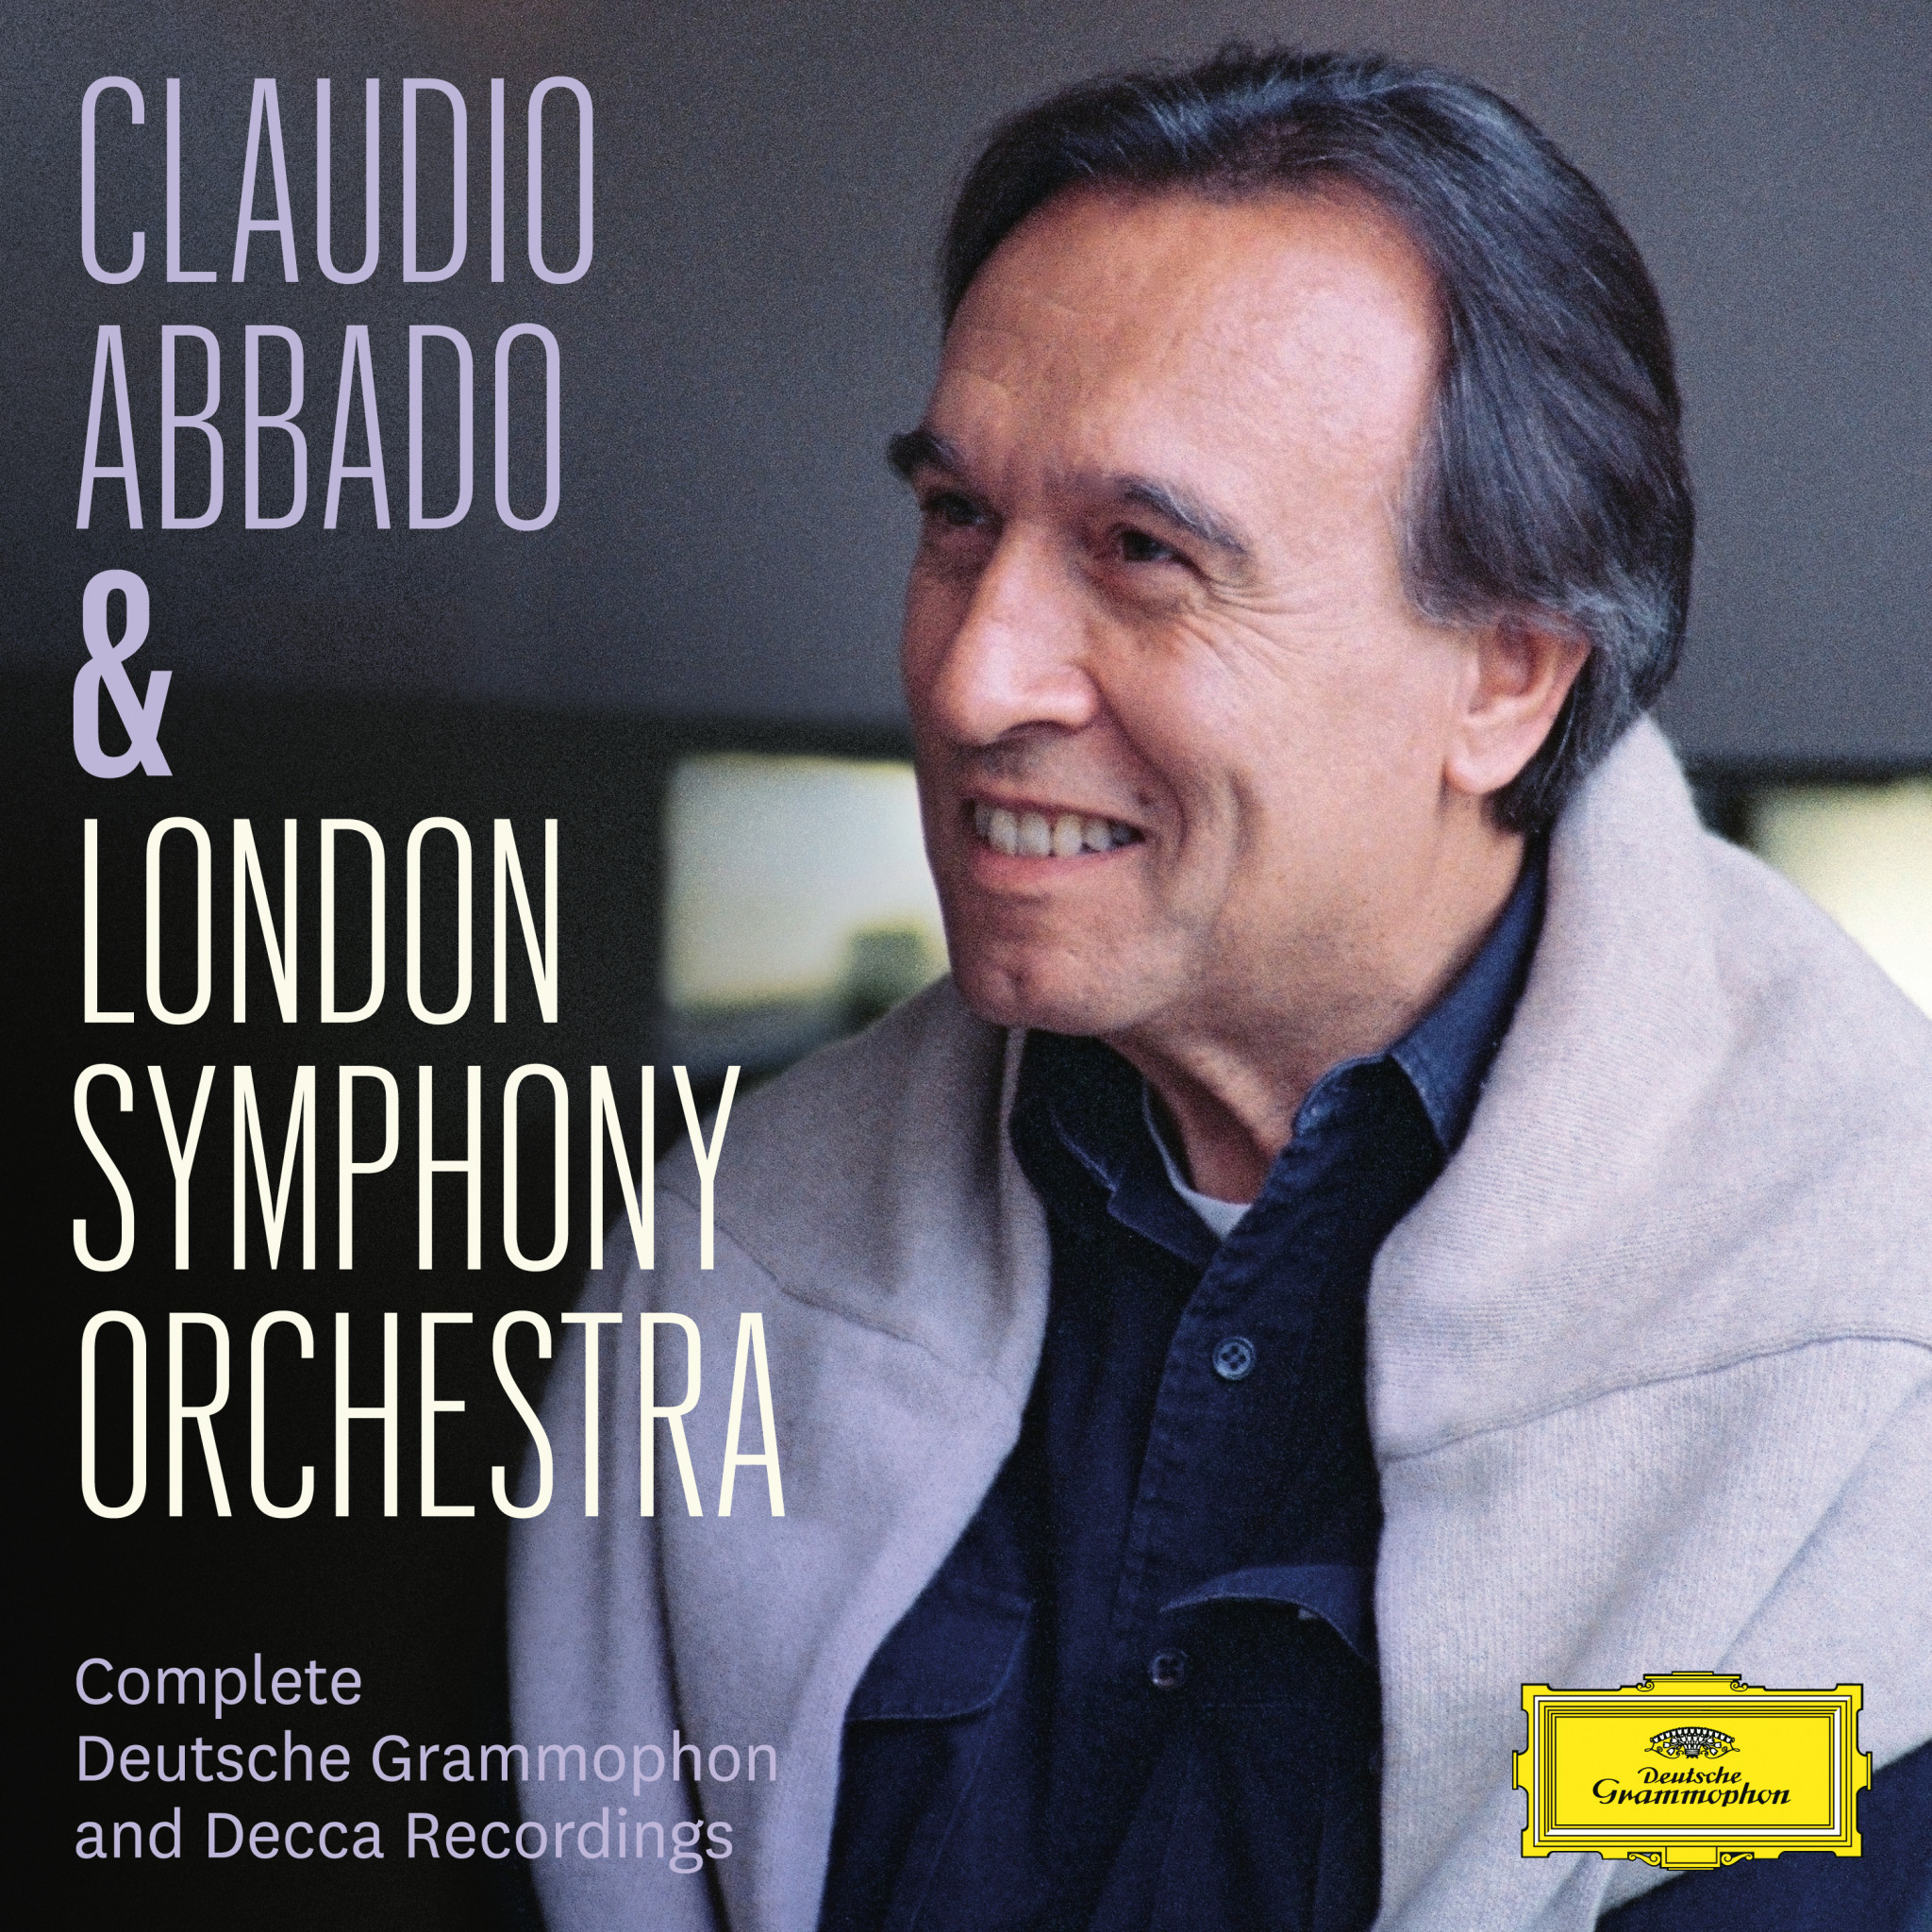 CLAUDIO ABBADO Complete Deutsche Grammophon and Decca Recordings 